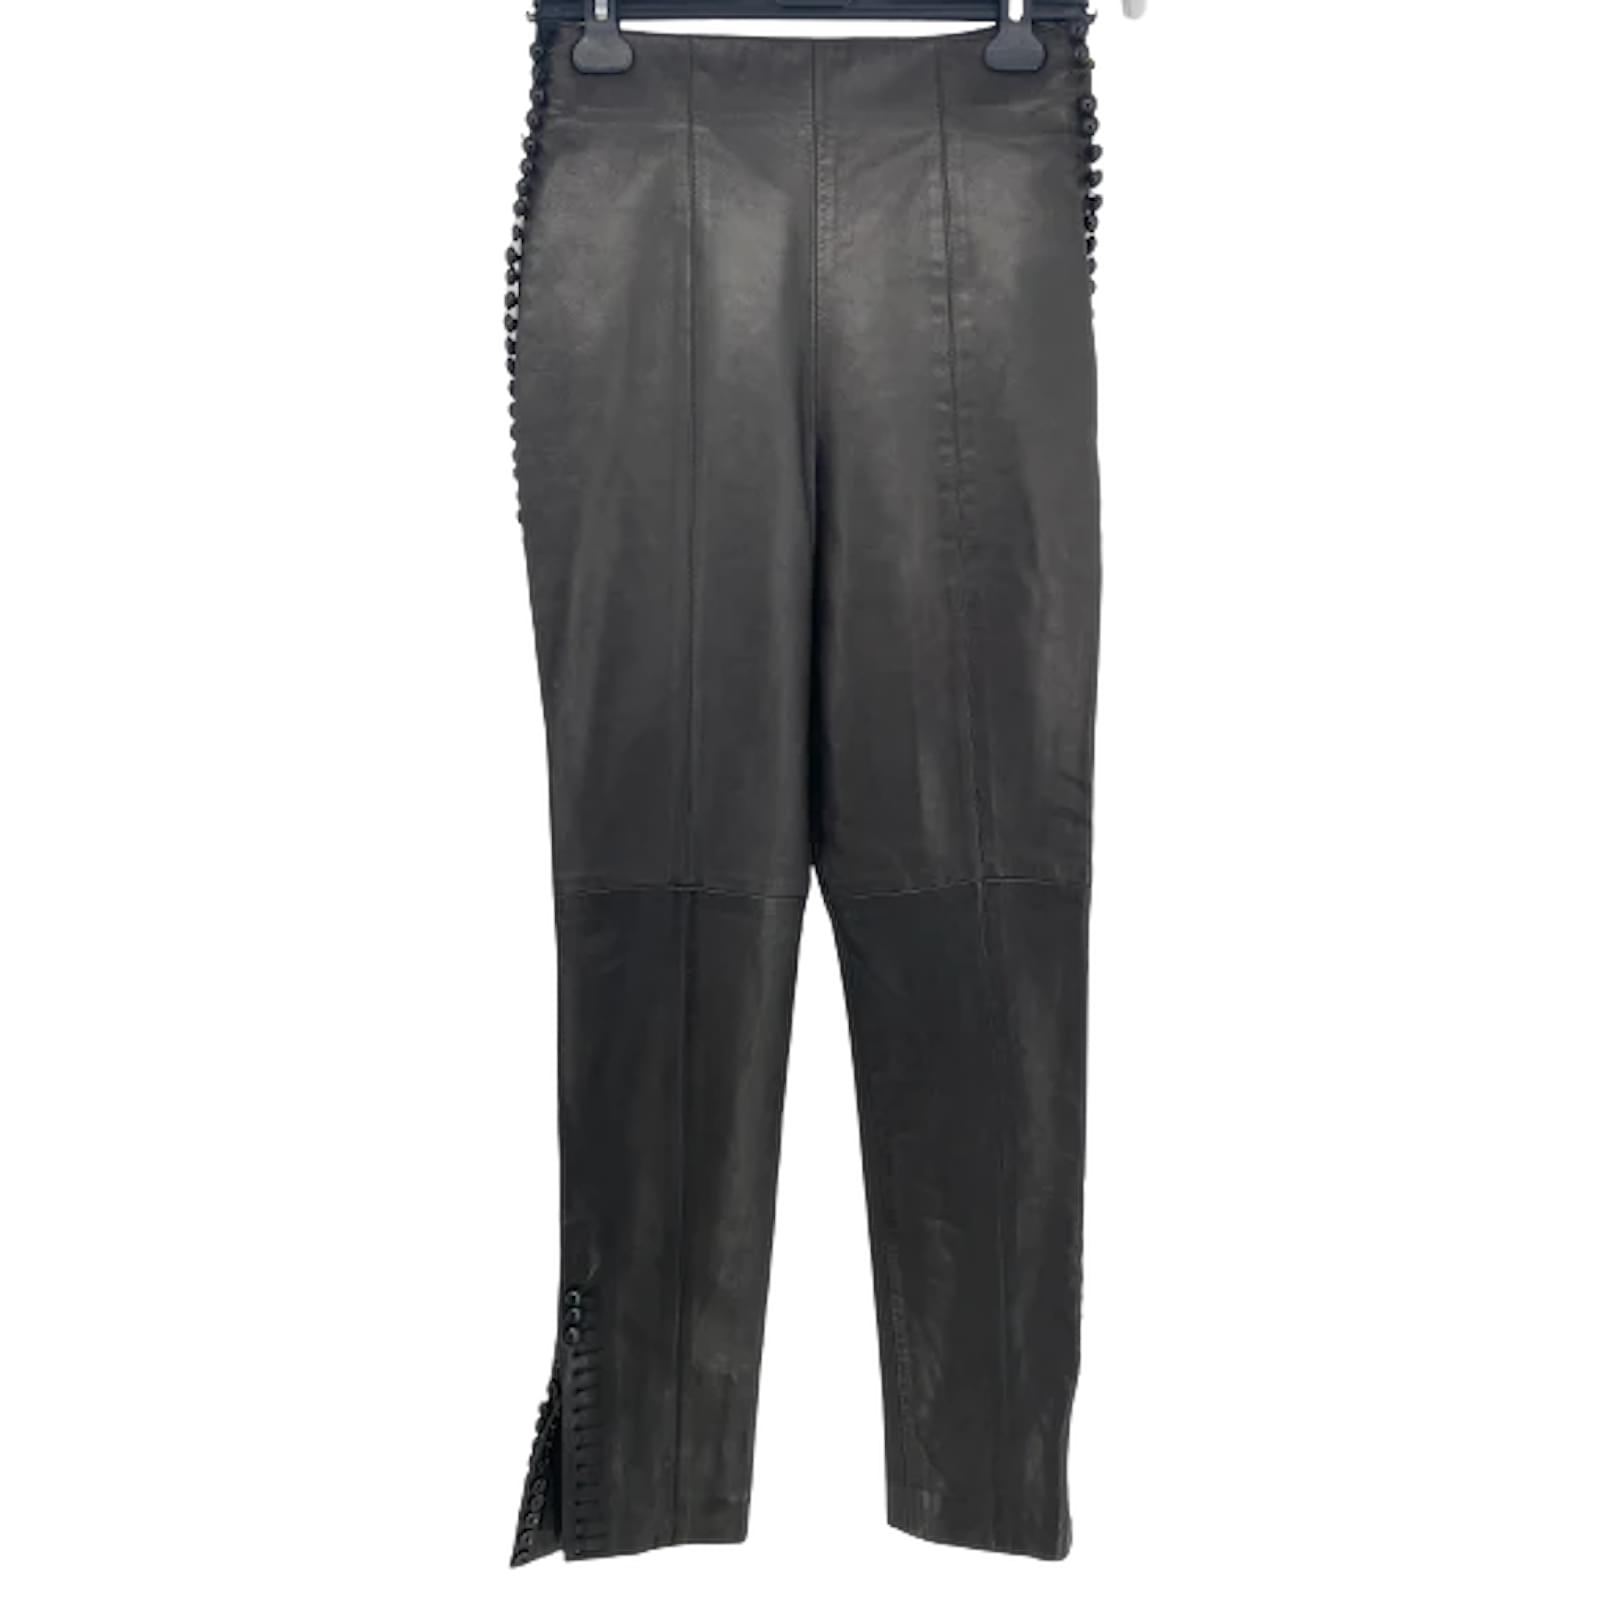 https://cdn1.jolicloset.com/imgr/full/2023/05/863964-1/black-dior-trousers-tfr-38-leather-pants-leggings.jpg